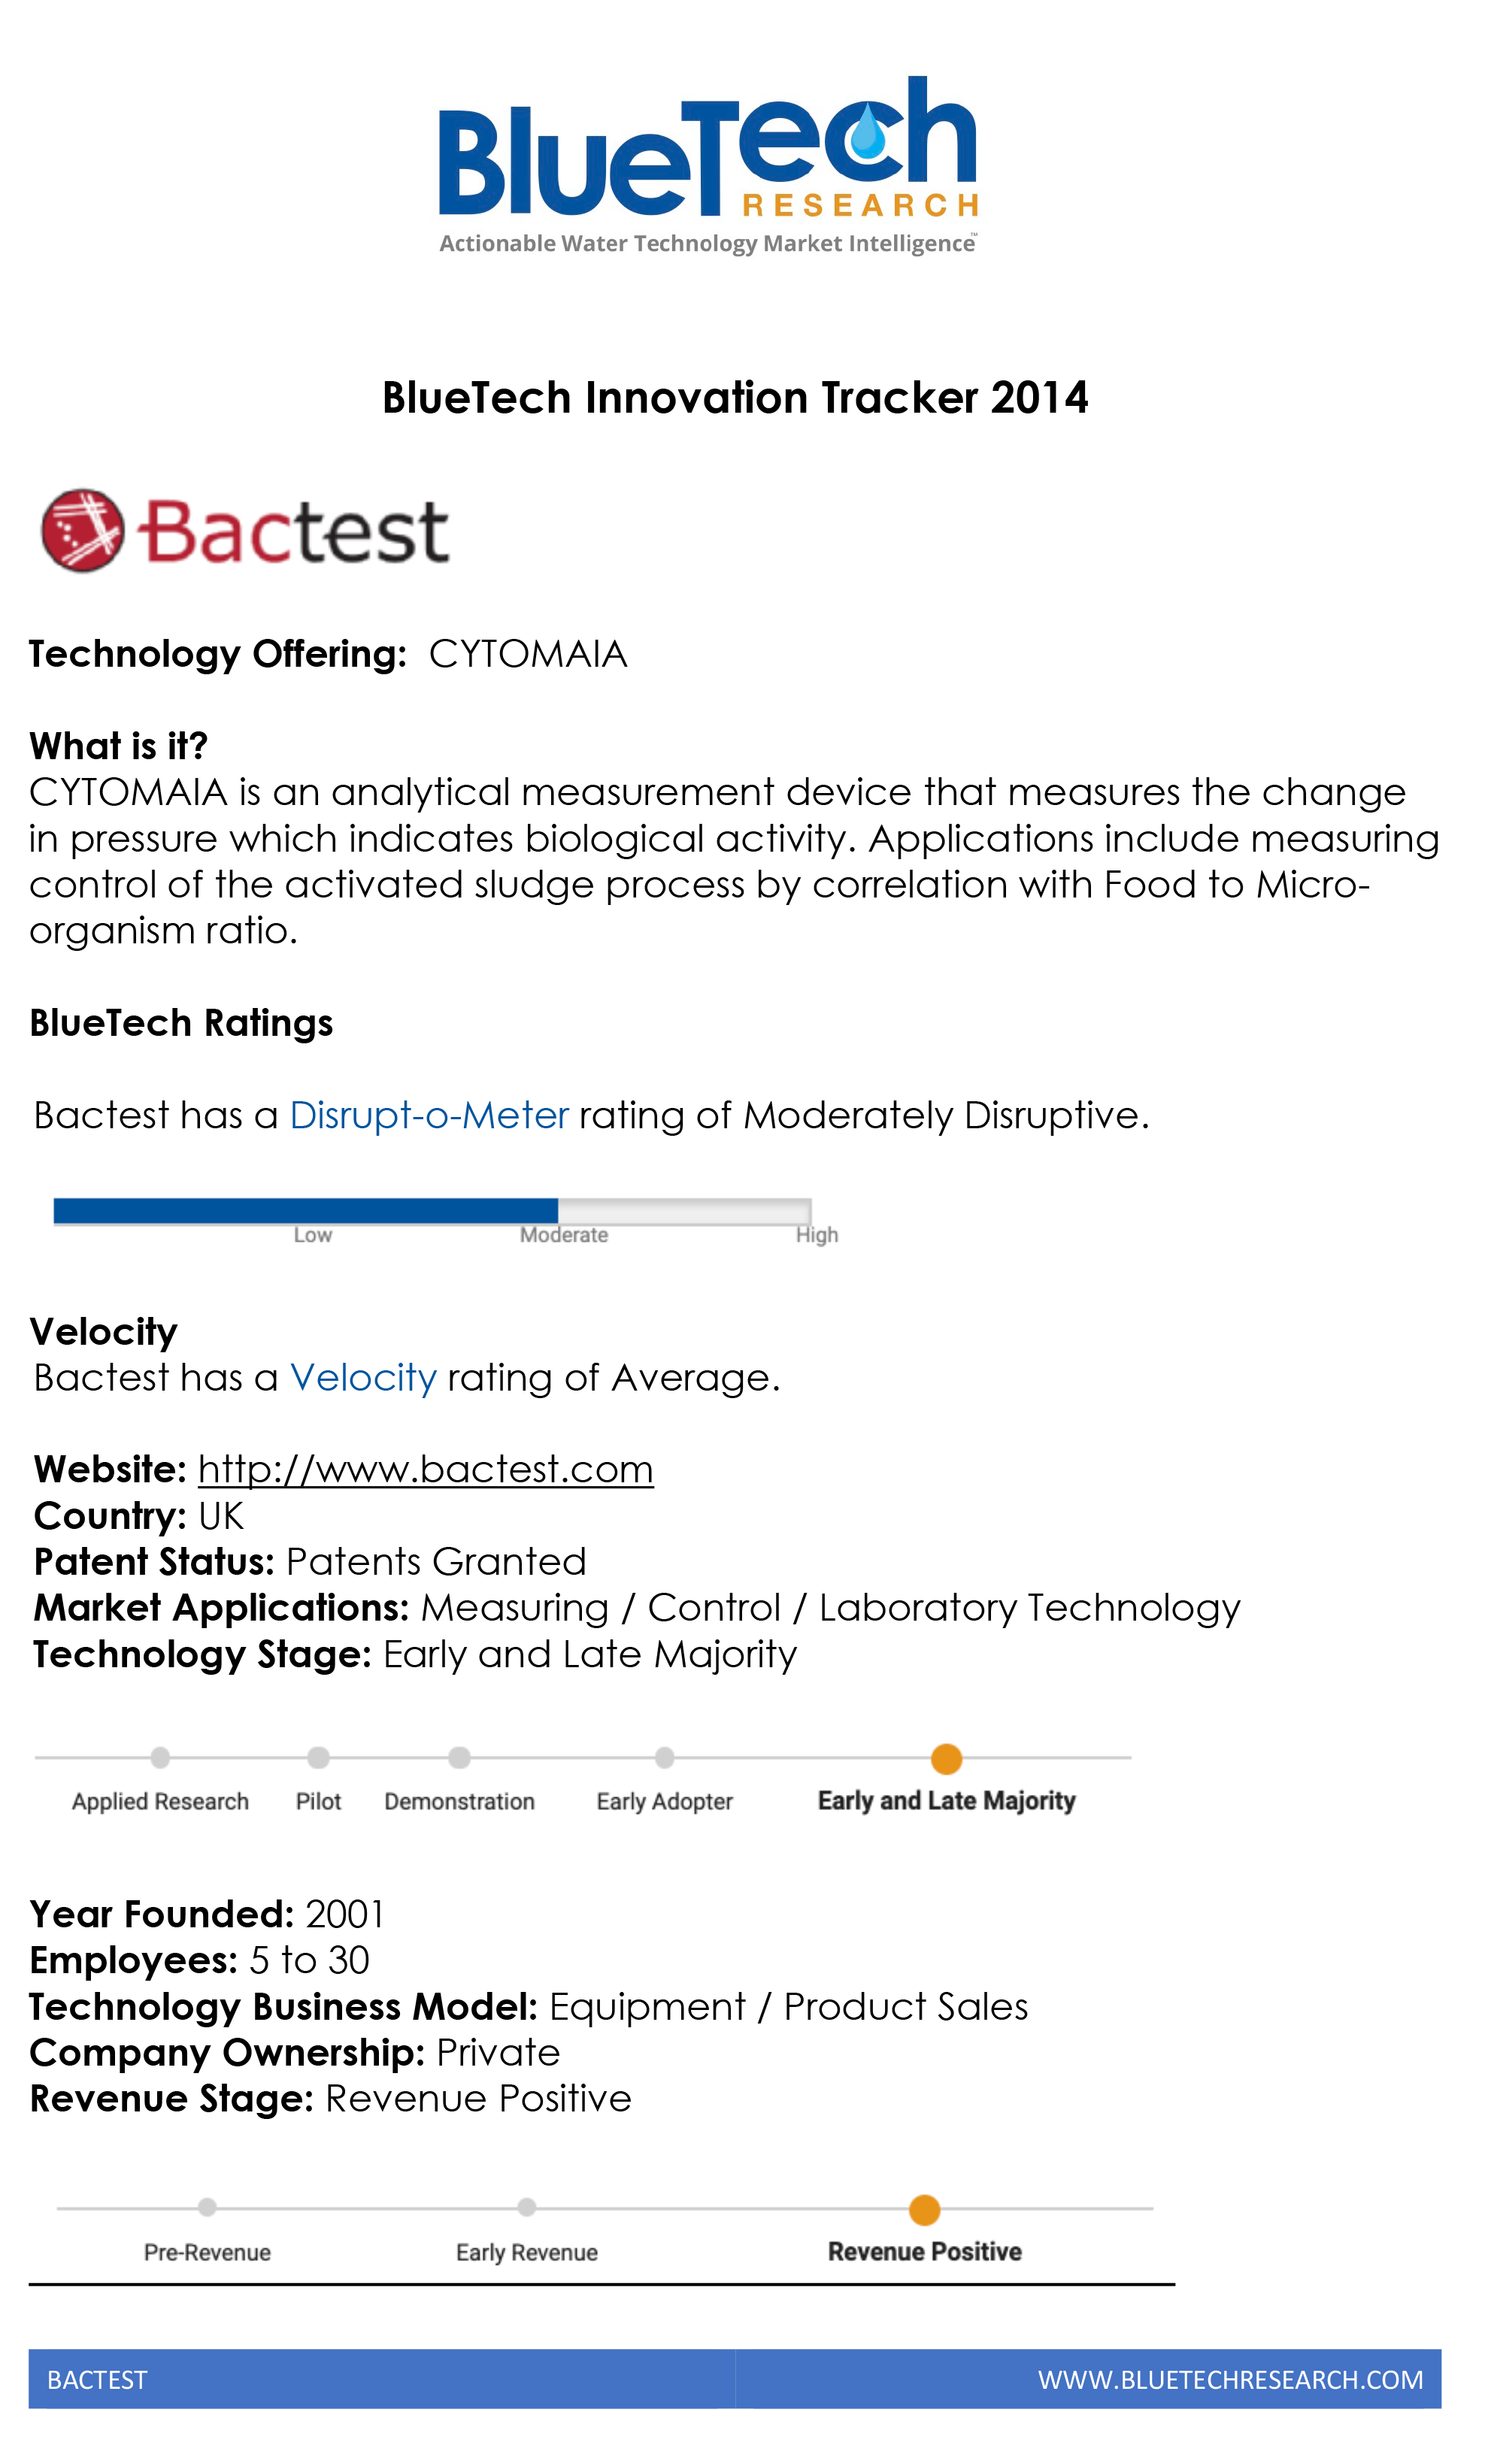 Bactest - BlueTech Innovation Tracker 2014